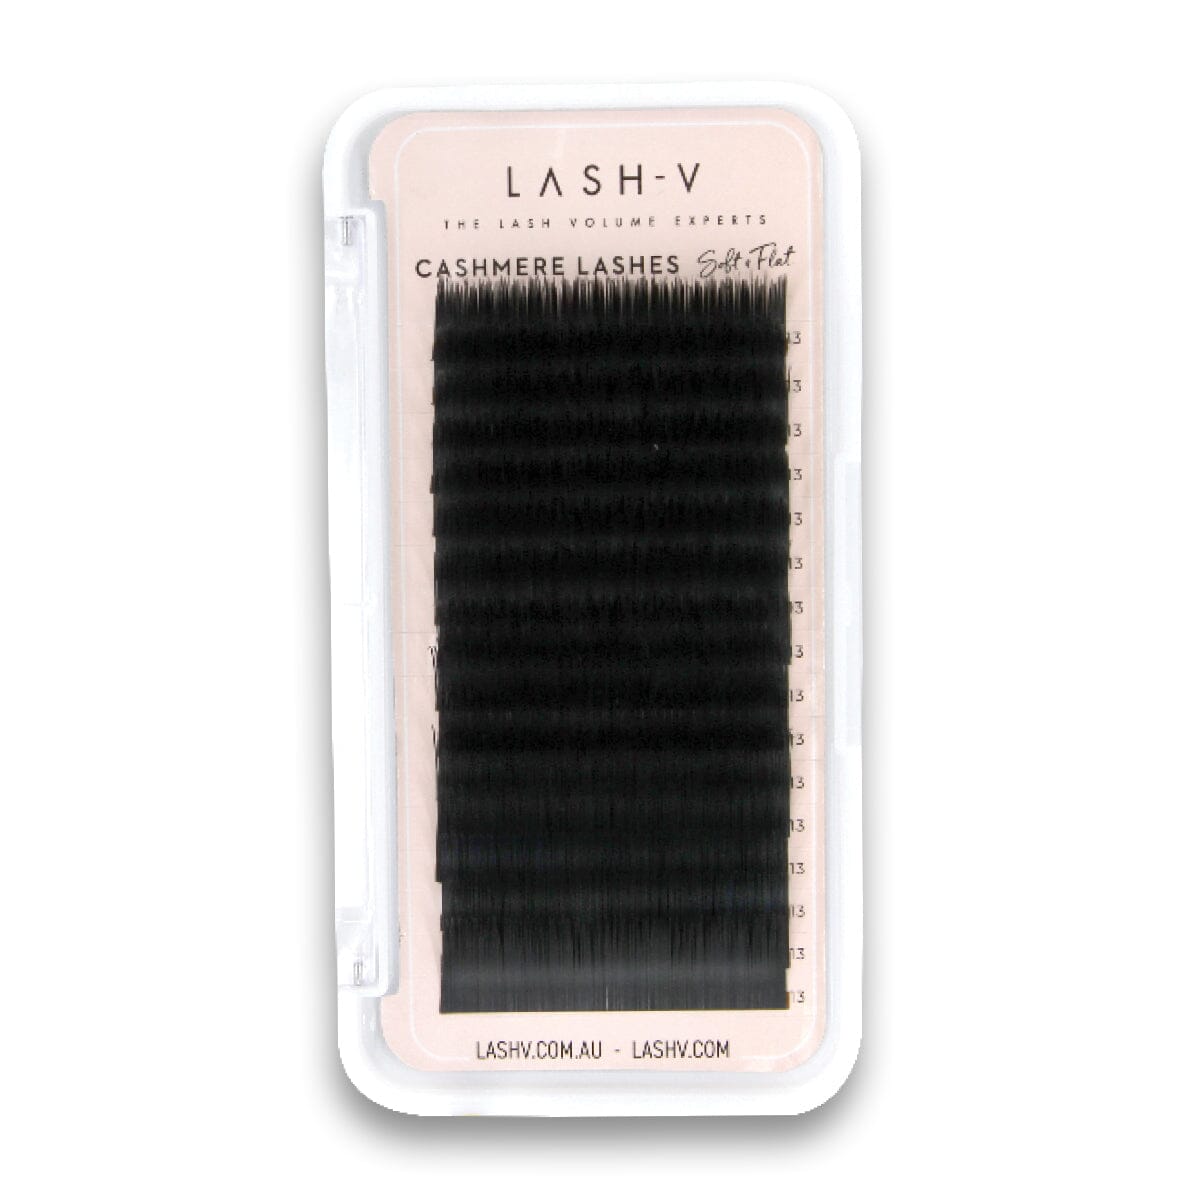 Cashmere Soft Flat Lashes - 0.20 - C Curl - LASH V